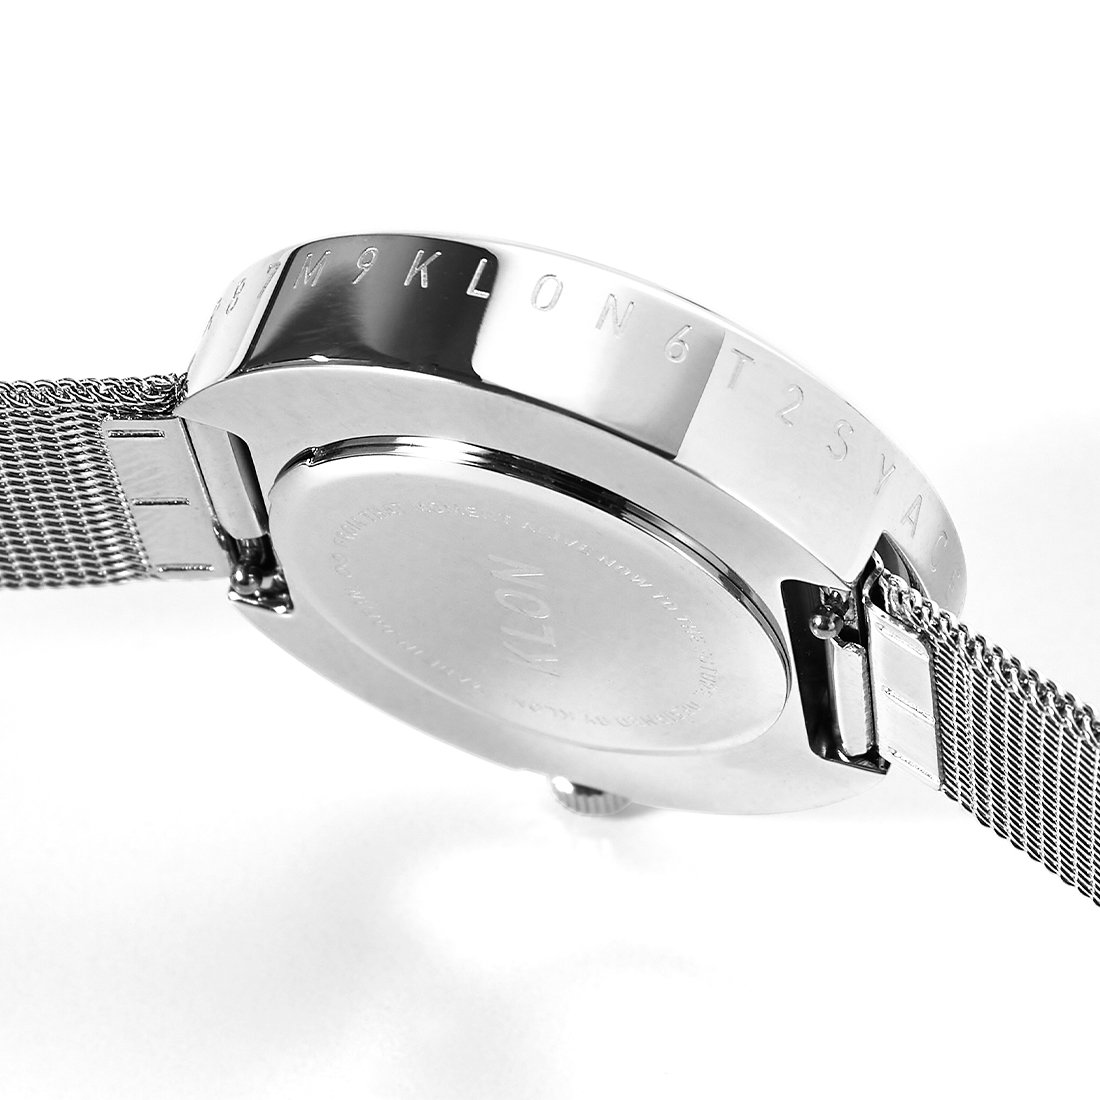 KLON INFINITY STAIR series -STANDARD- [36/W-FACE] カジュアル 腕時計